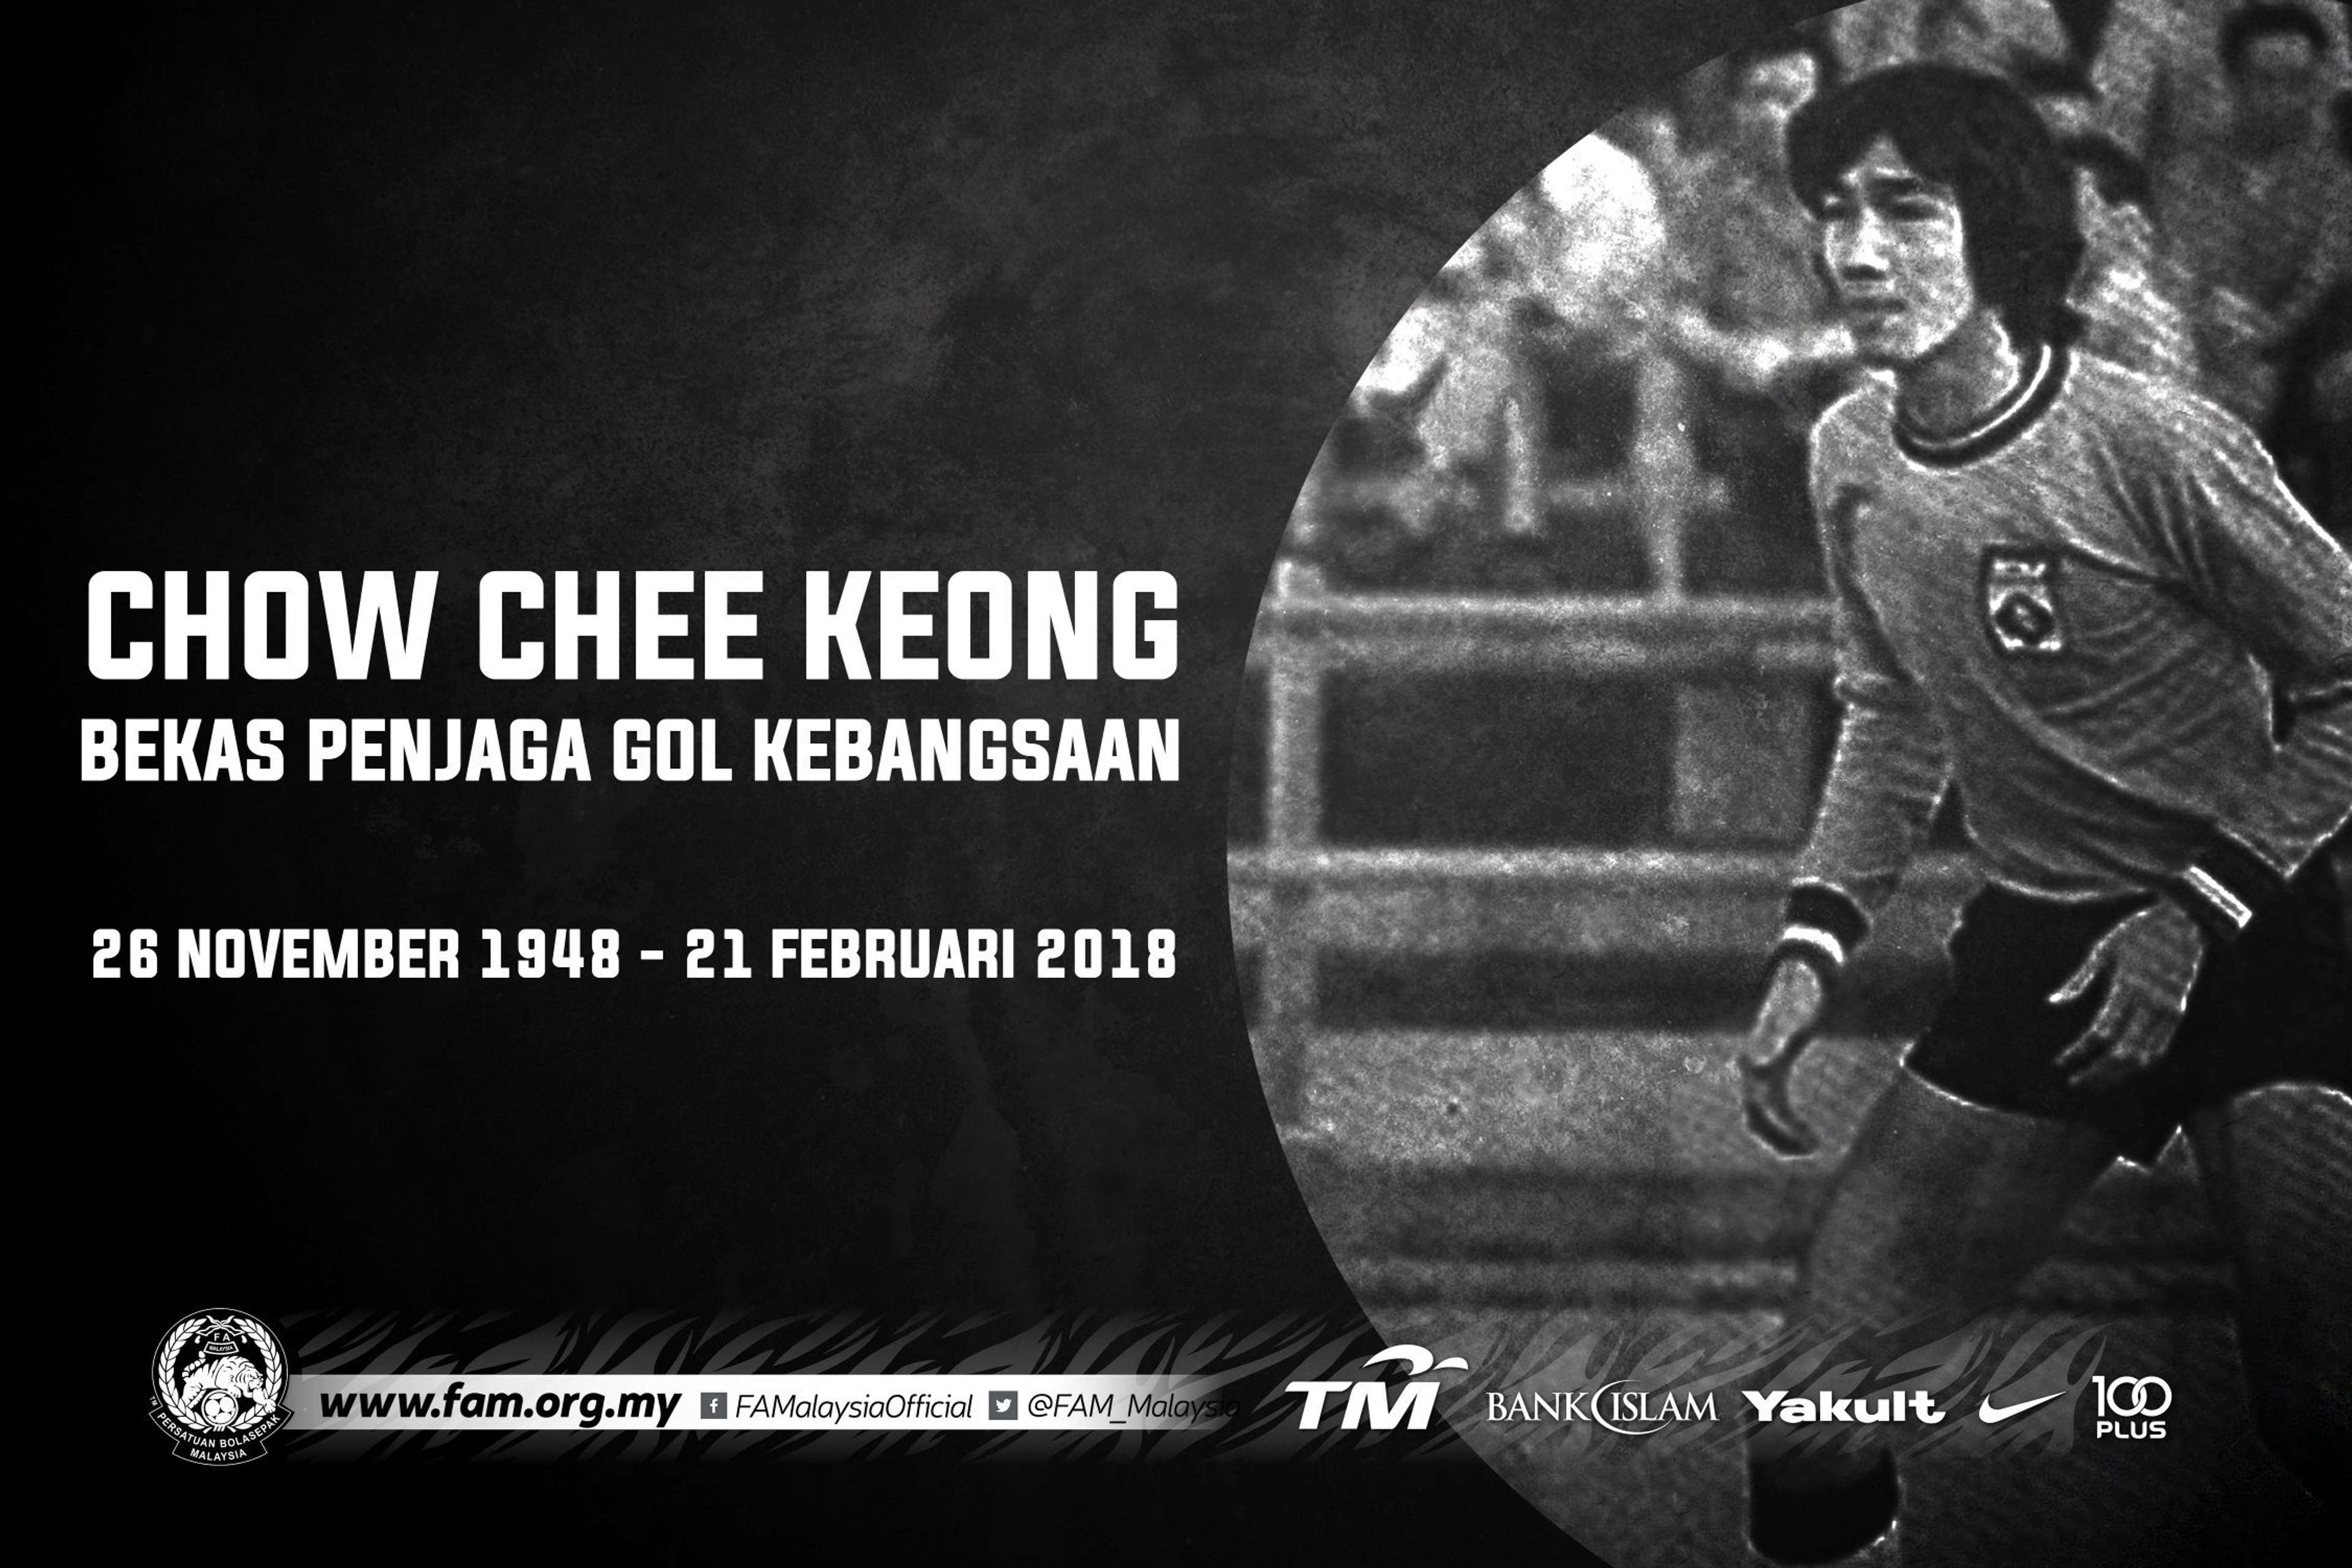 Chow Chee Keong